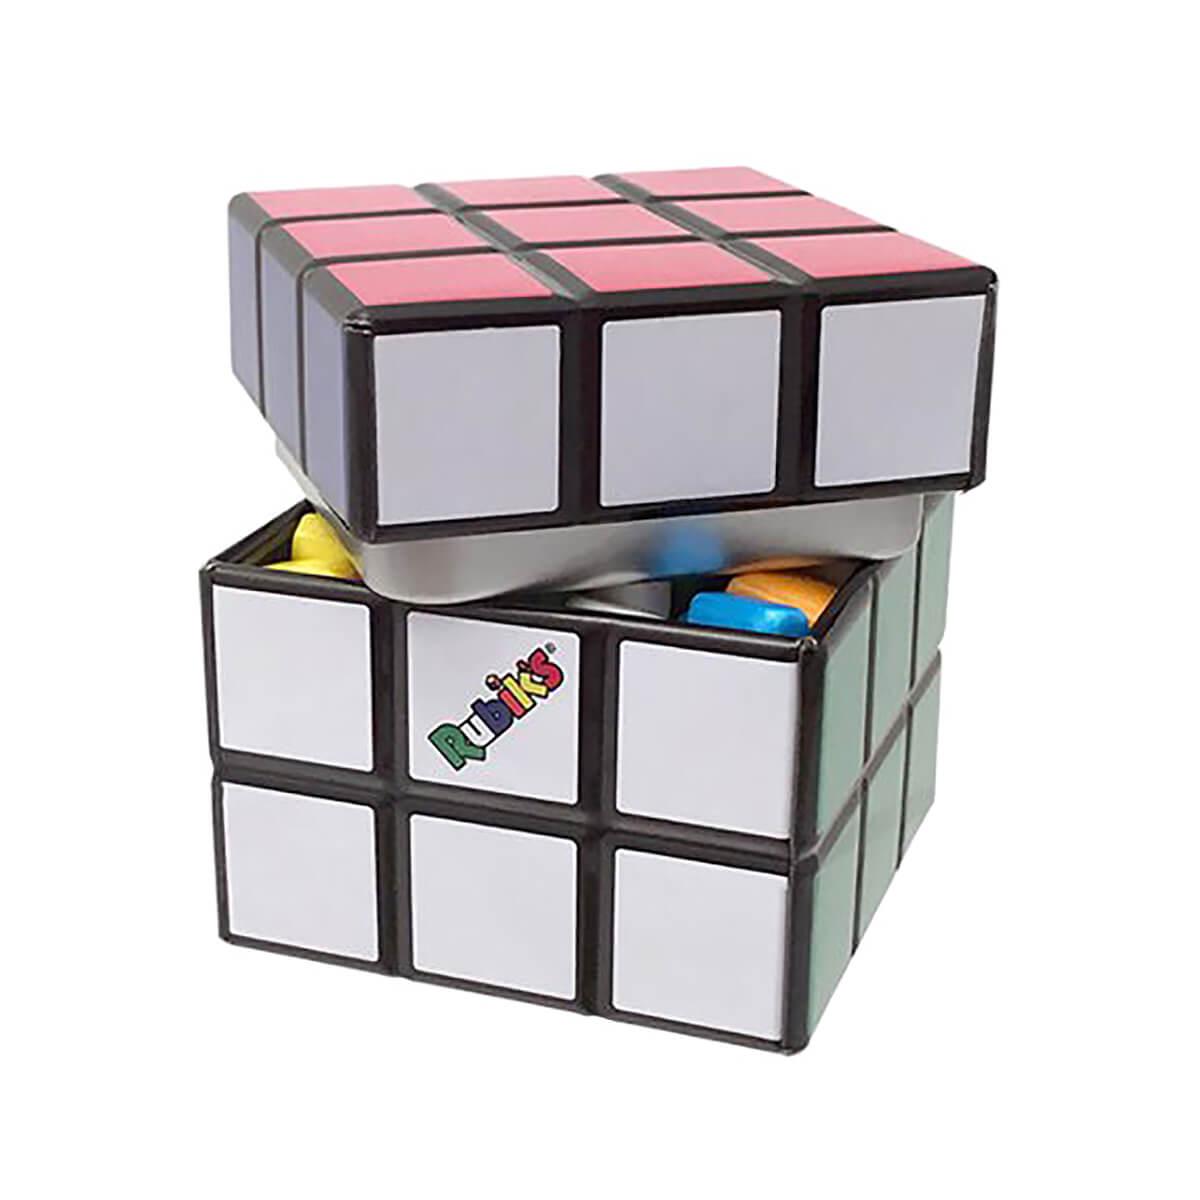  Rubik's Candy Cube